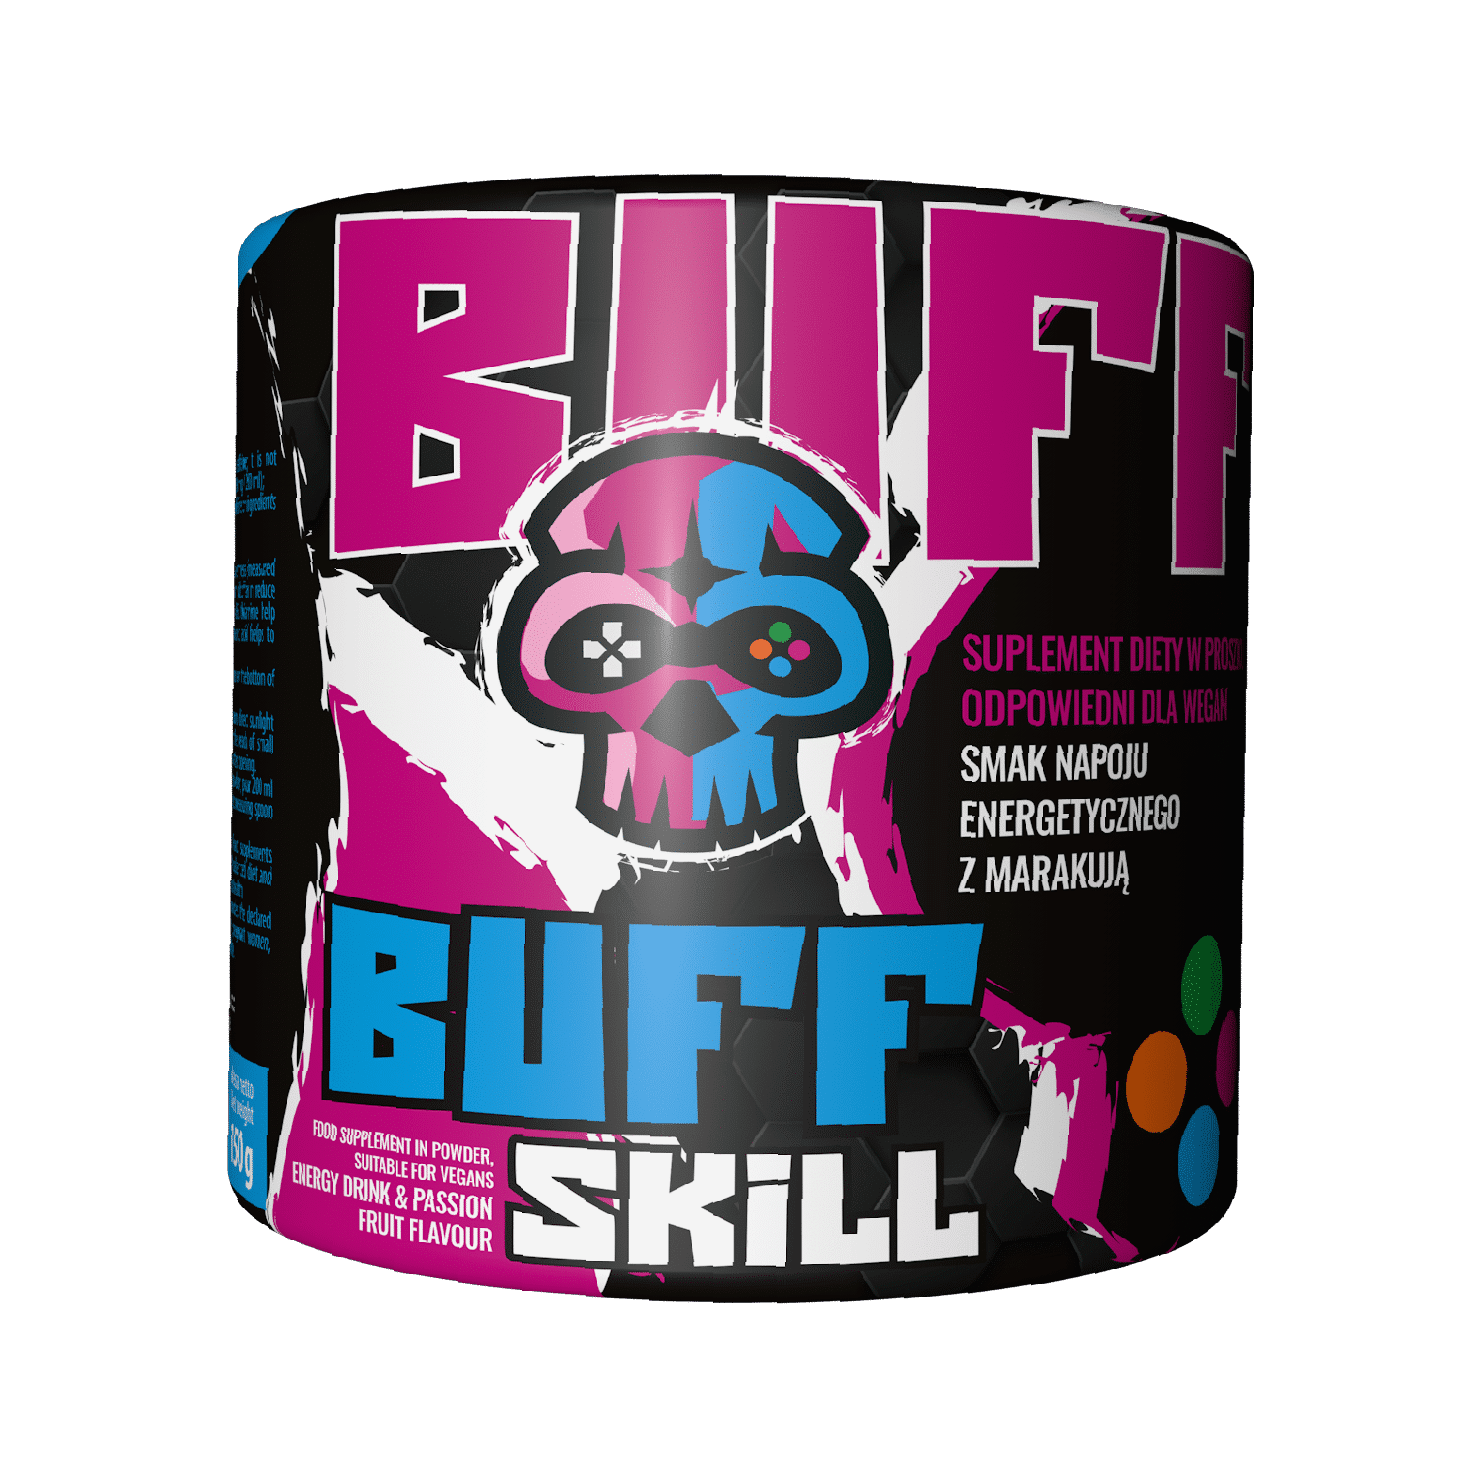 Buff Skill - what is it